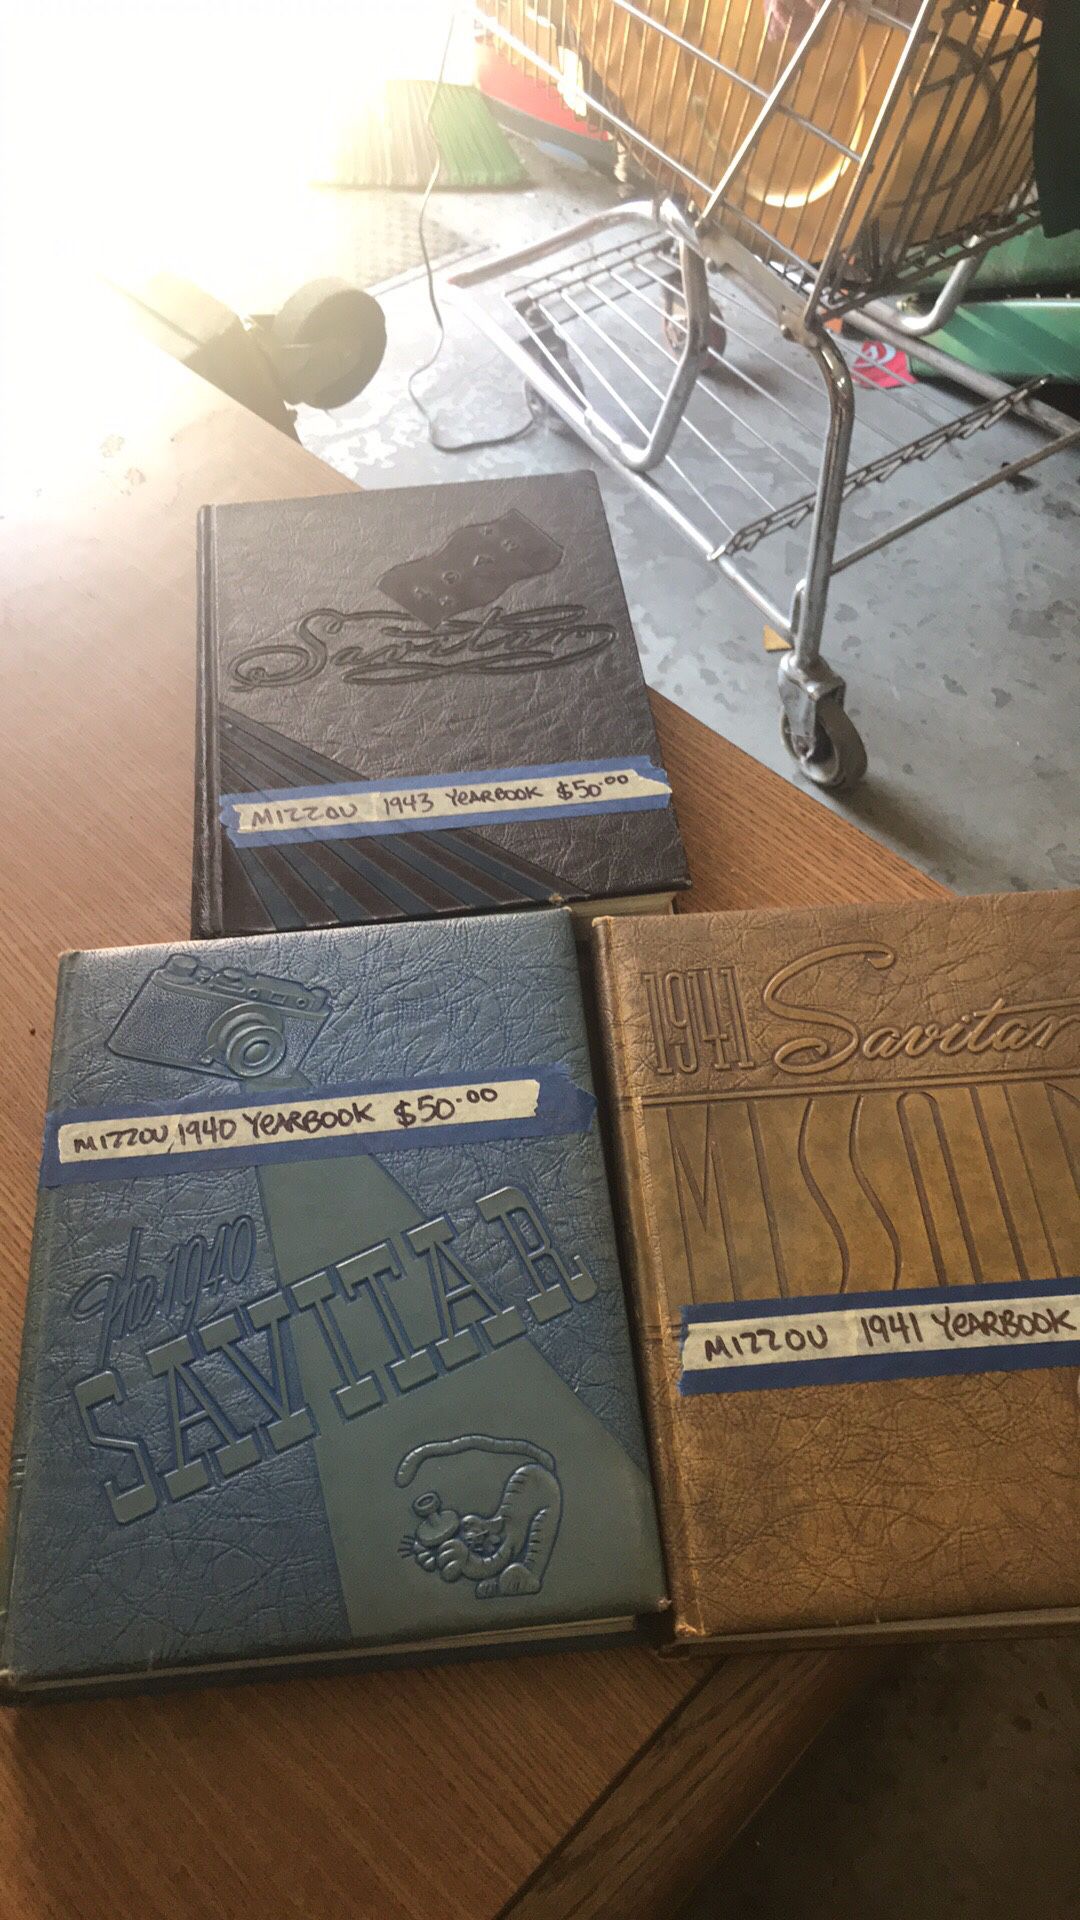 Mizzou yearbooks 1940/1941/1943